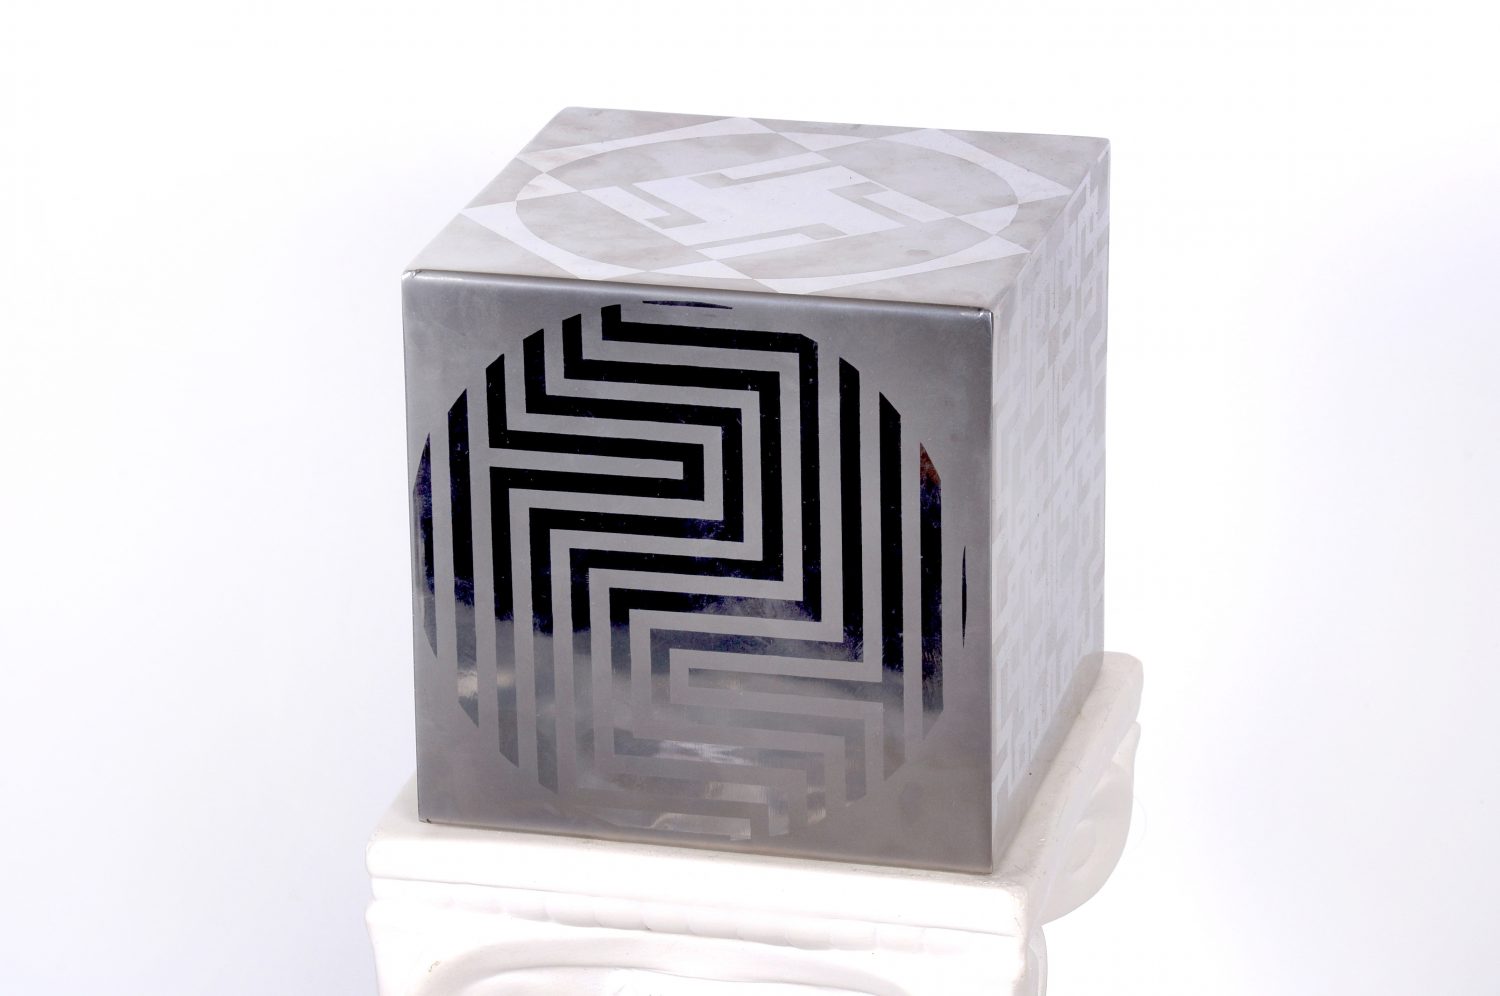 thumbnail of Cube One by Ecuadorian artist Estuardo Maldonado. medium: Stainless steel. Dimensions: 5.9 x 5.9 x 5.9 inches. date: unknown